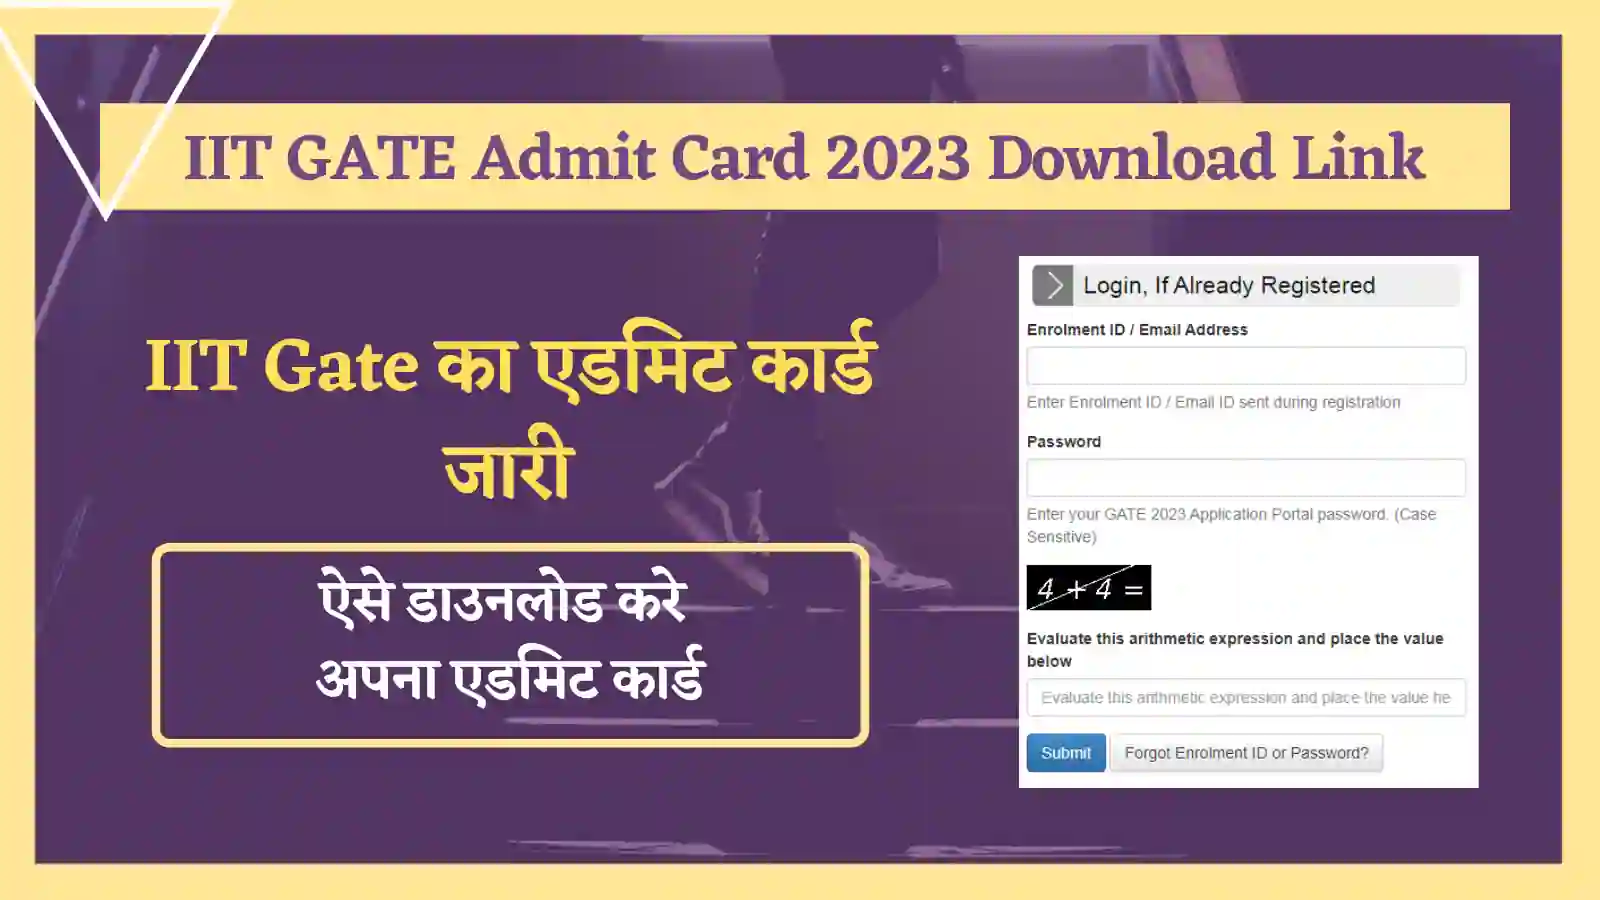 IIT GATE Admit Card 2023 Download Link